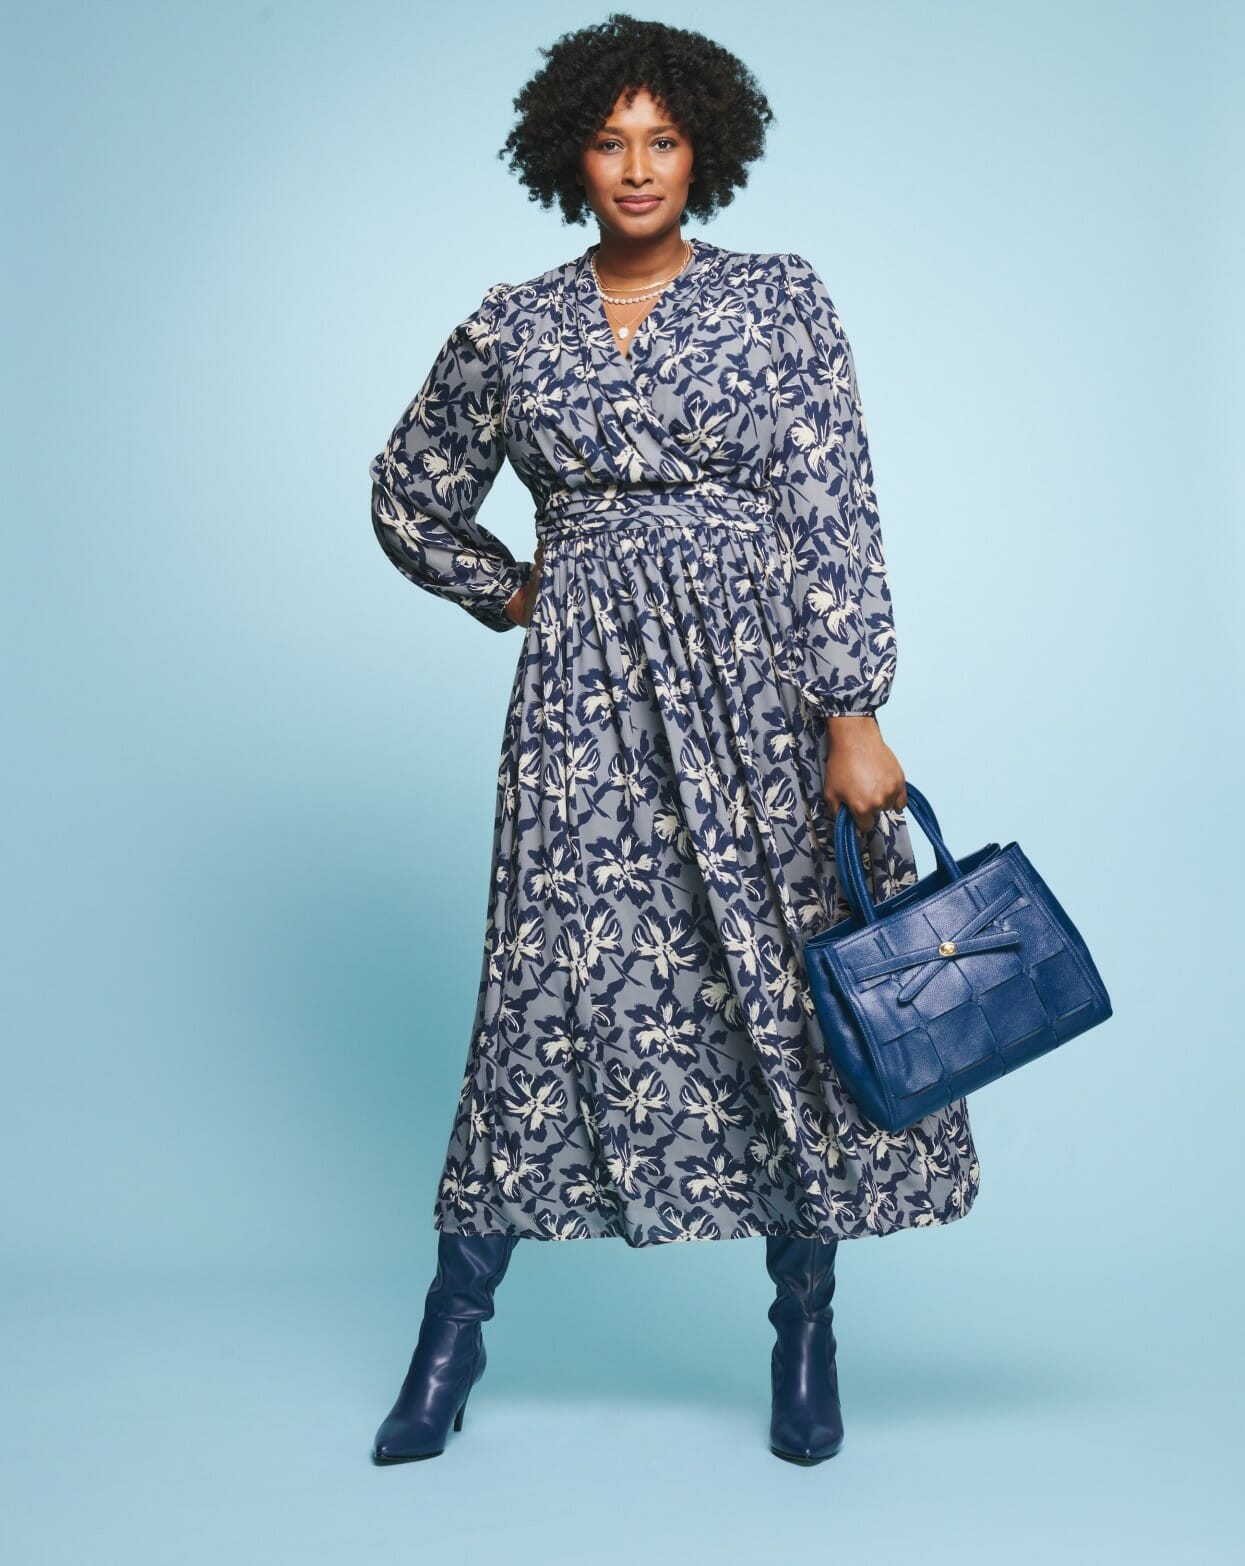 plus size model wearing a floral blue dress holding a blue purse.